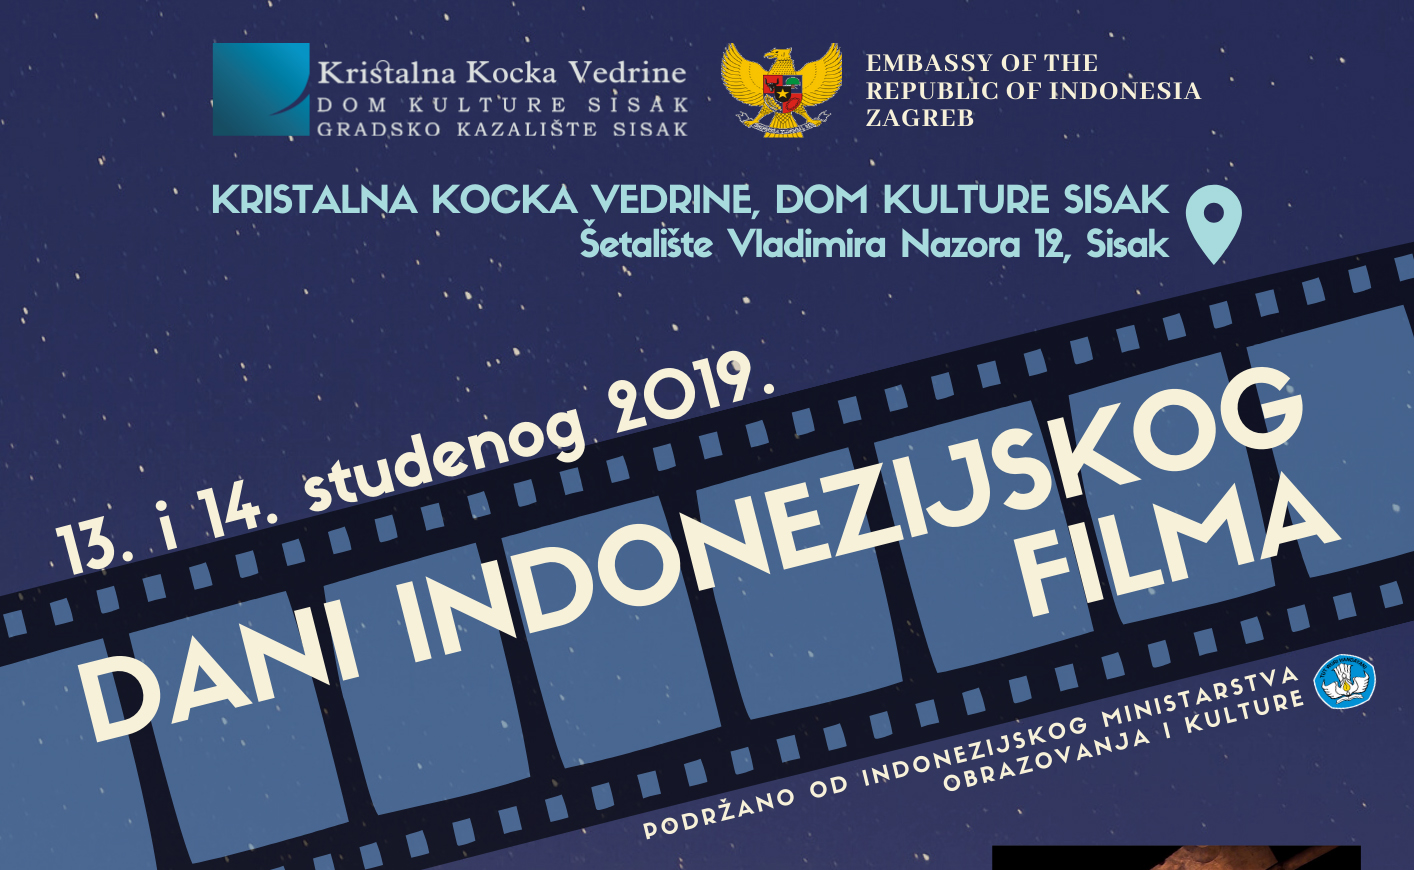 You are currently viewing Dani indonezijskog filma u Domu kulture KKV Sisak